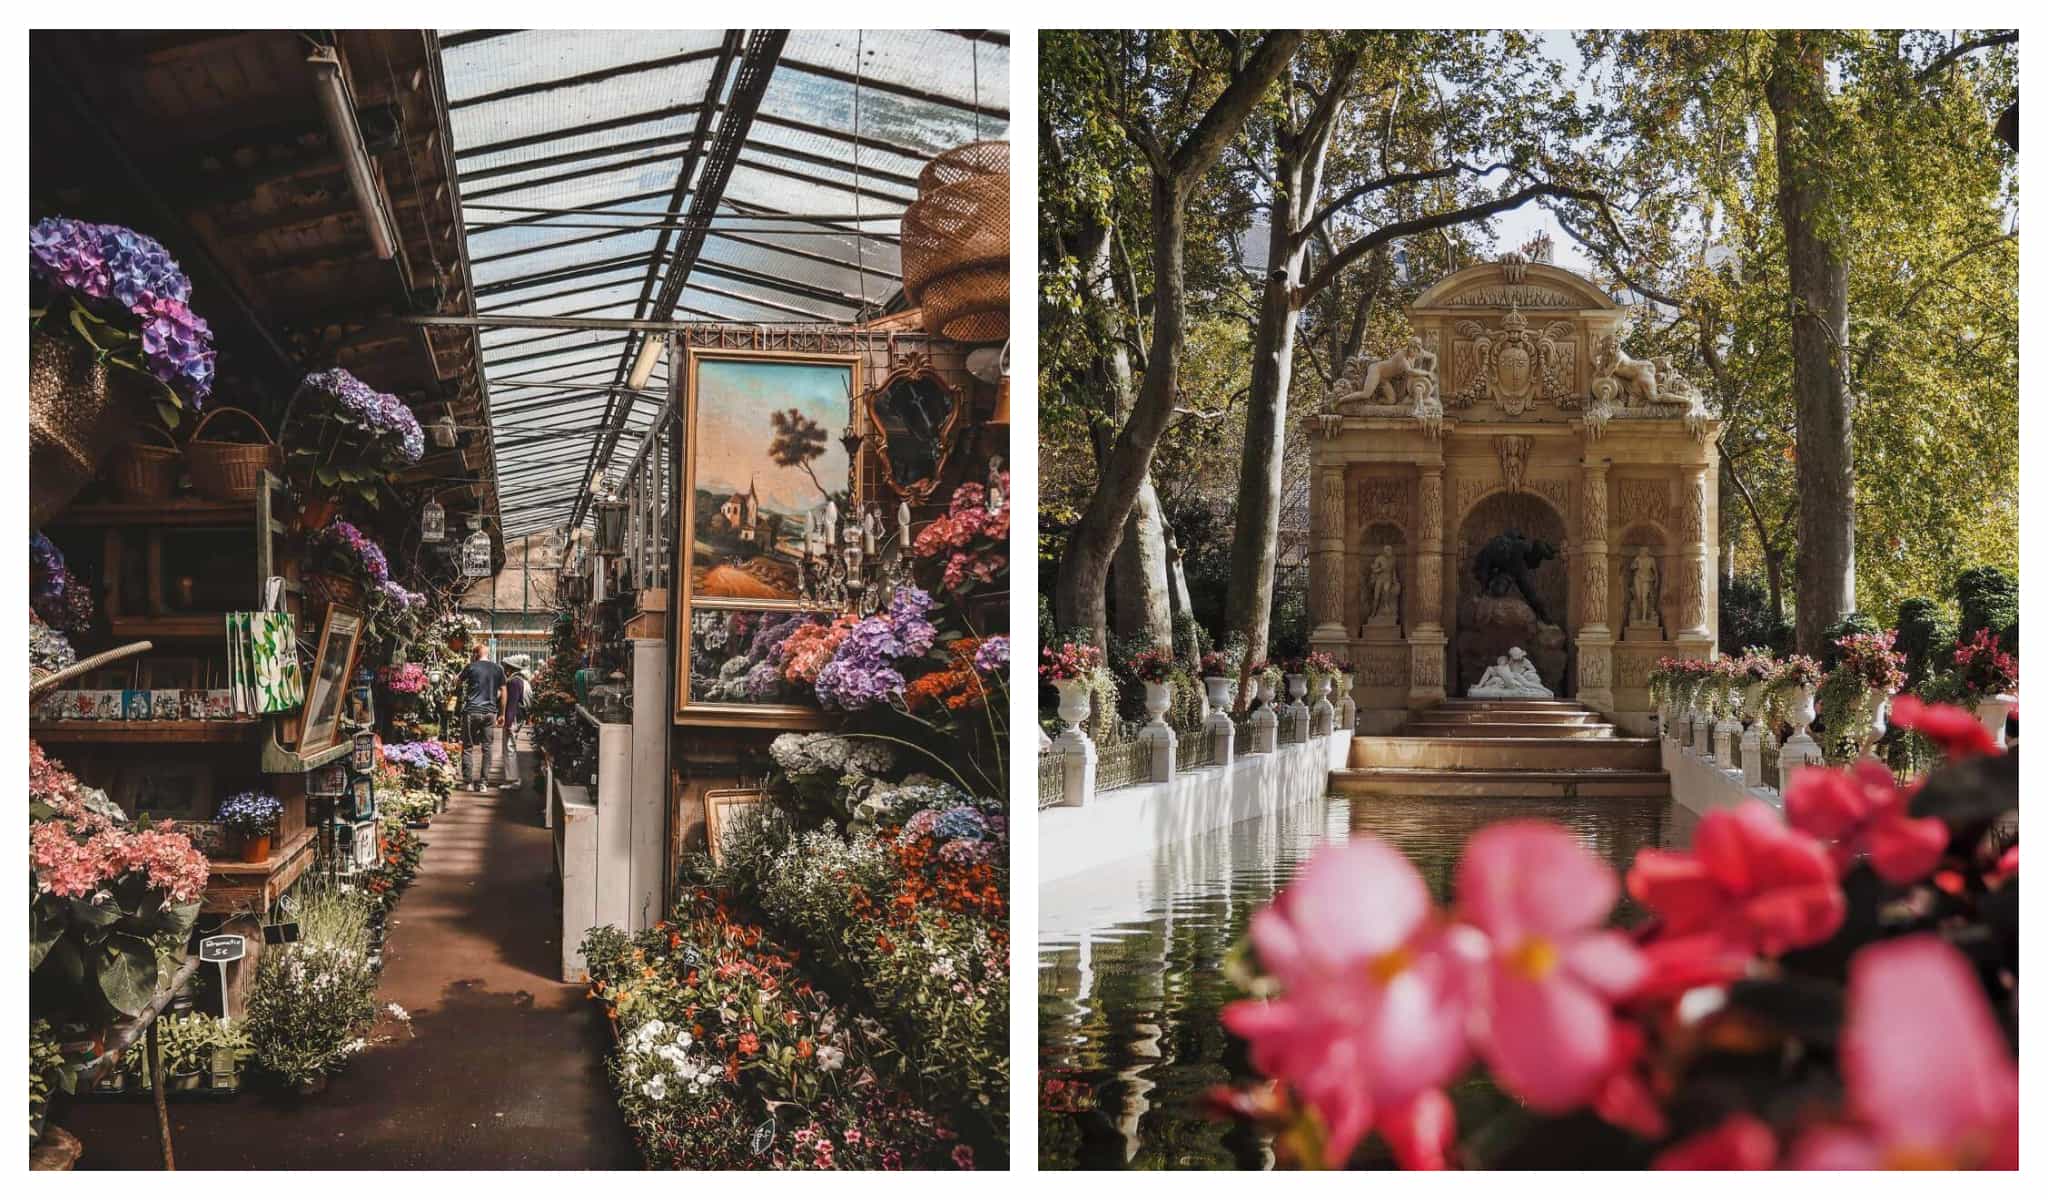 Left: a flower market in Paris's Ile de la cité; right: spring flowers blooming in the Luxembourg Gardens in Paris.